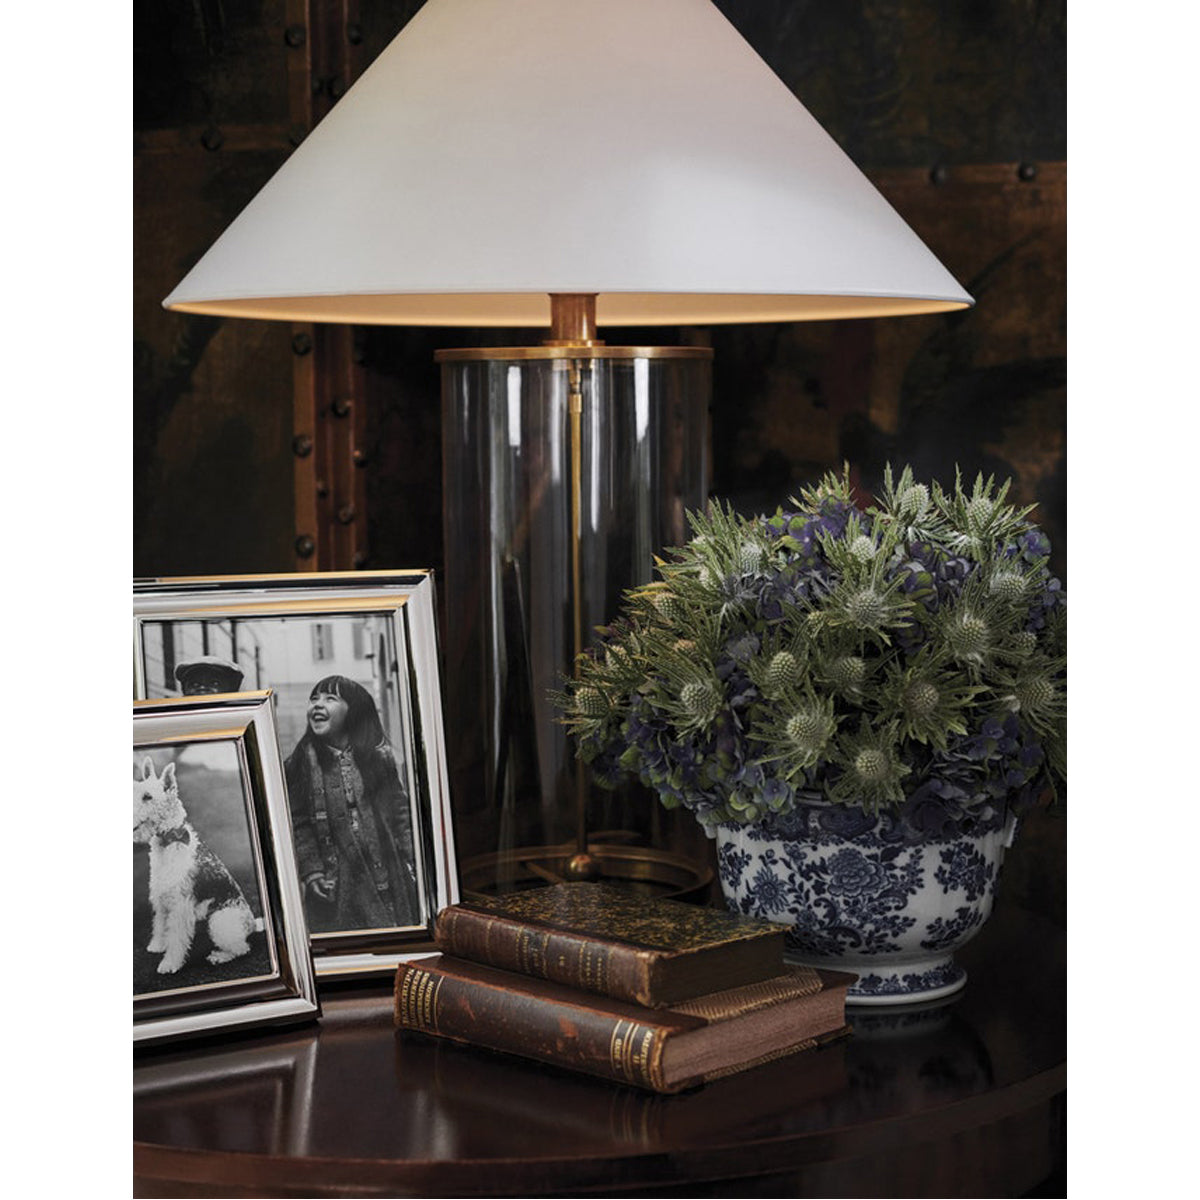 Visual Comfort Modern Table Lamp